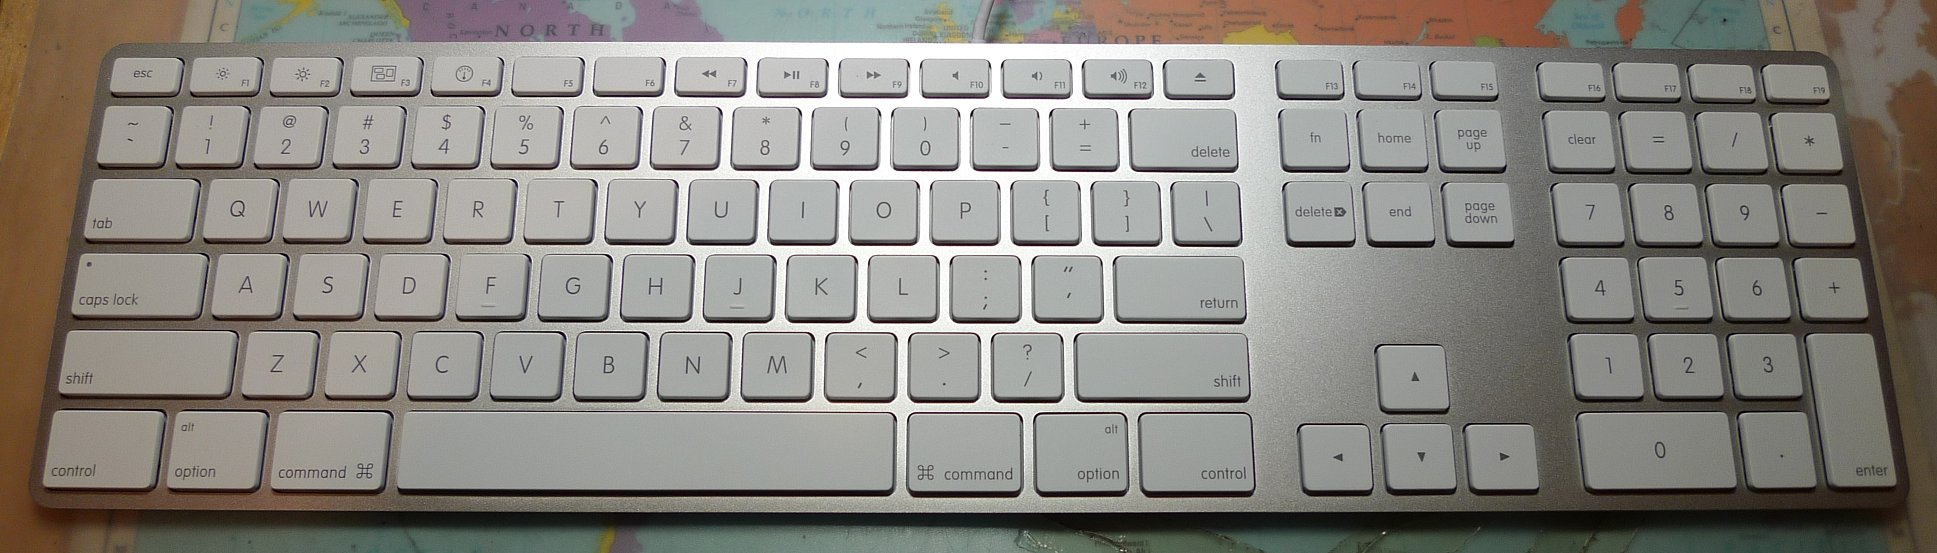 Apple iMac Keyboard A1243